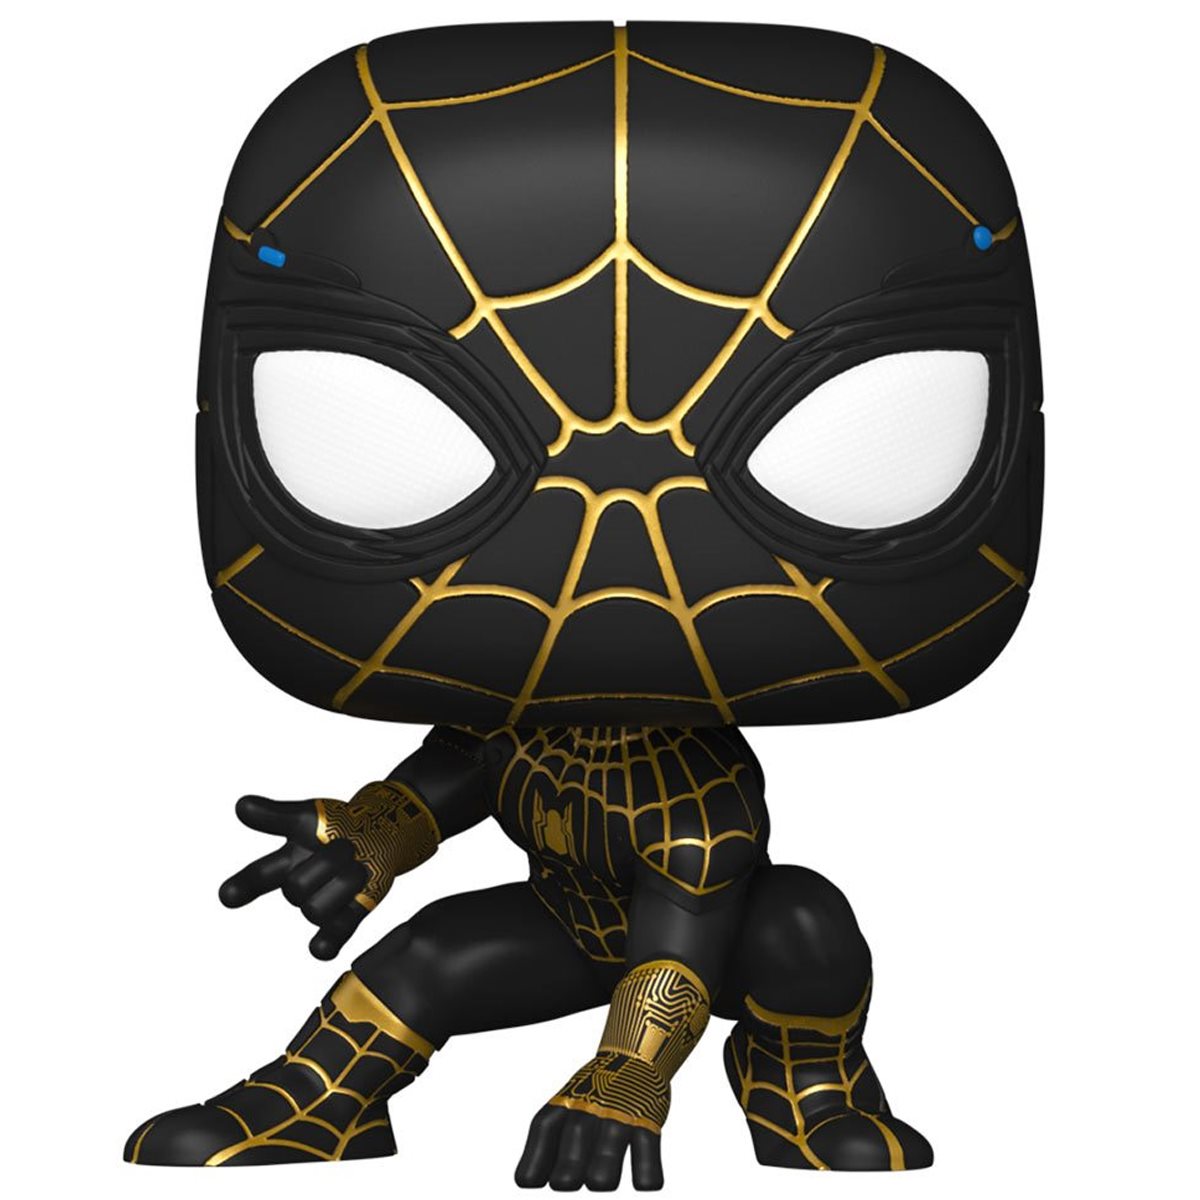 Funko POP! Marvel: Spider-Man: No Way Home Spider-Man Black and Gold Suit